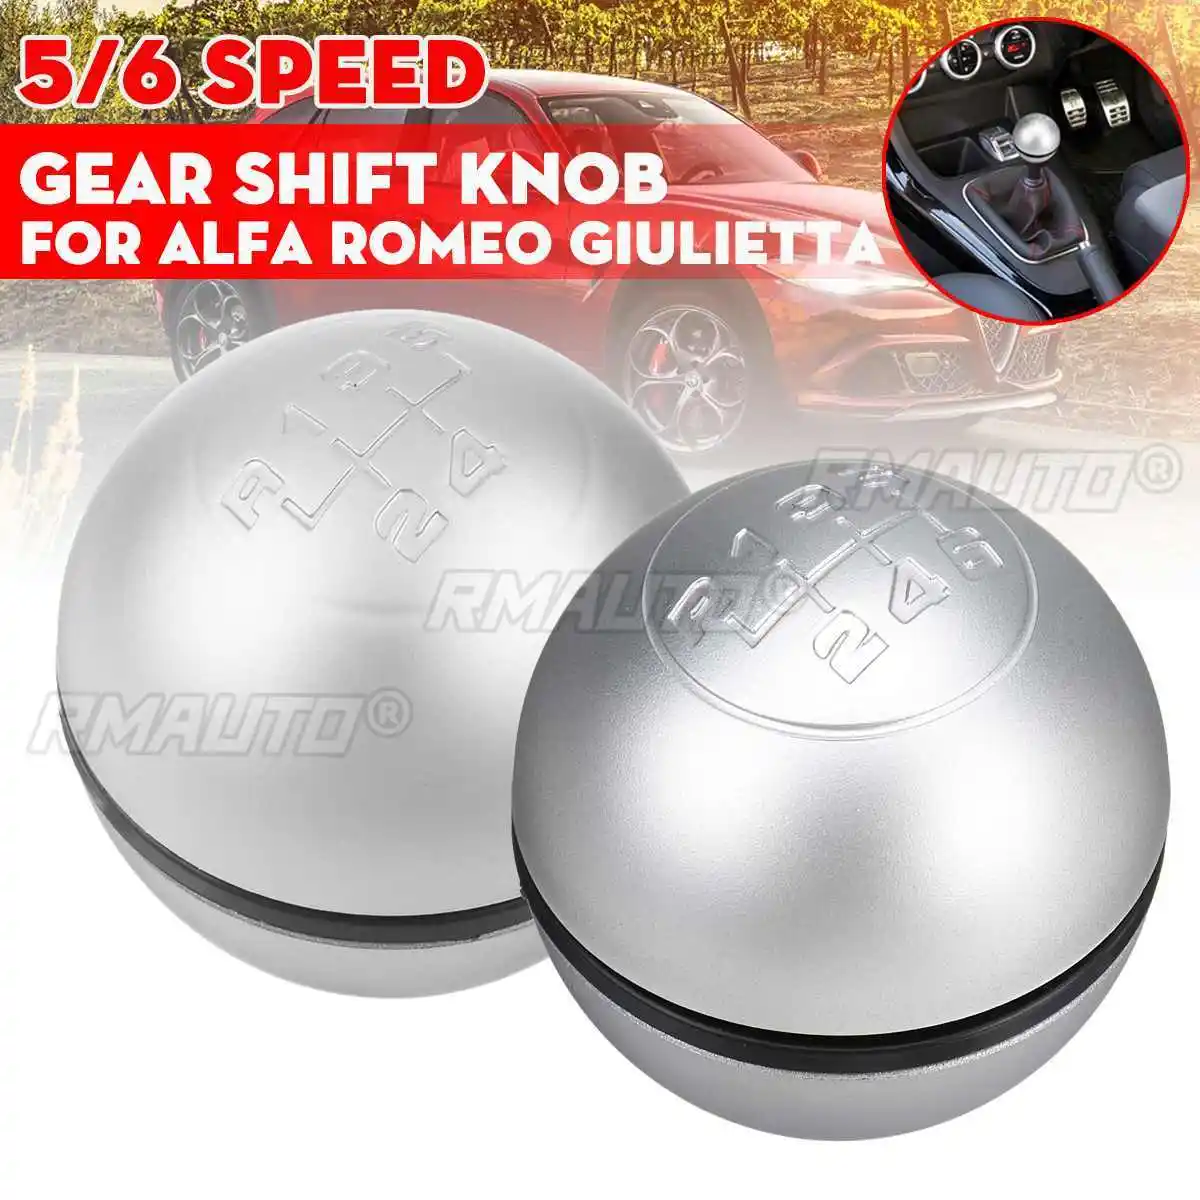 5/6 Speed Round Ball Gear Shift Knob For Alfa Romeo Giulietta 2012 2013 2014 2015 2016 2017 2018